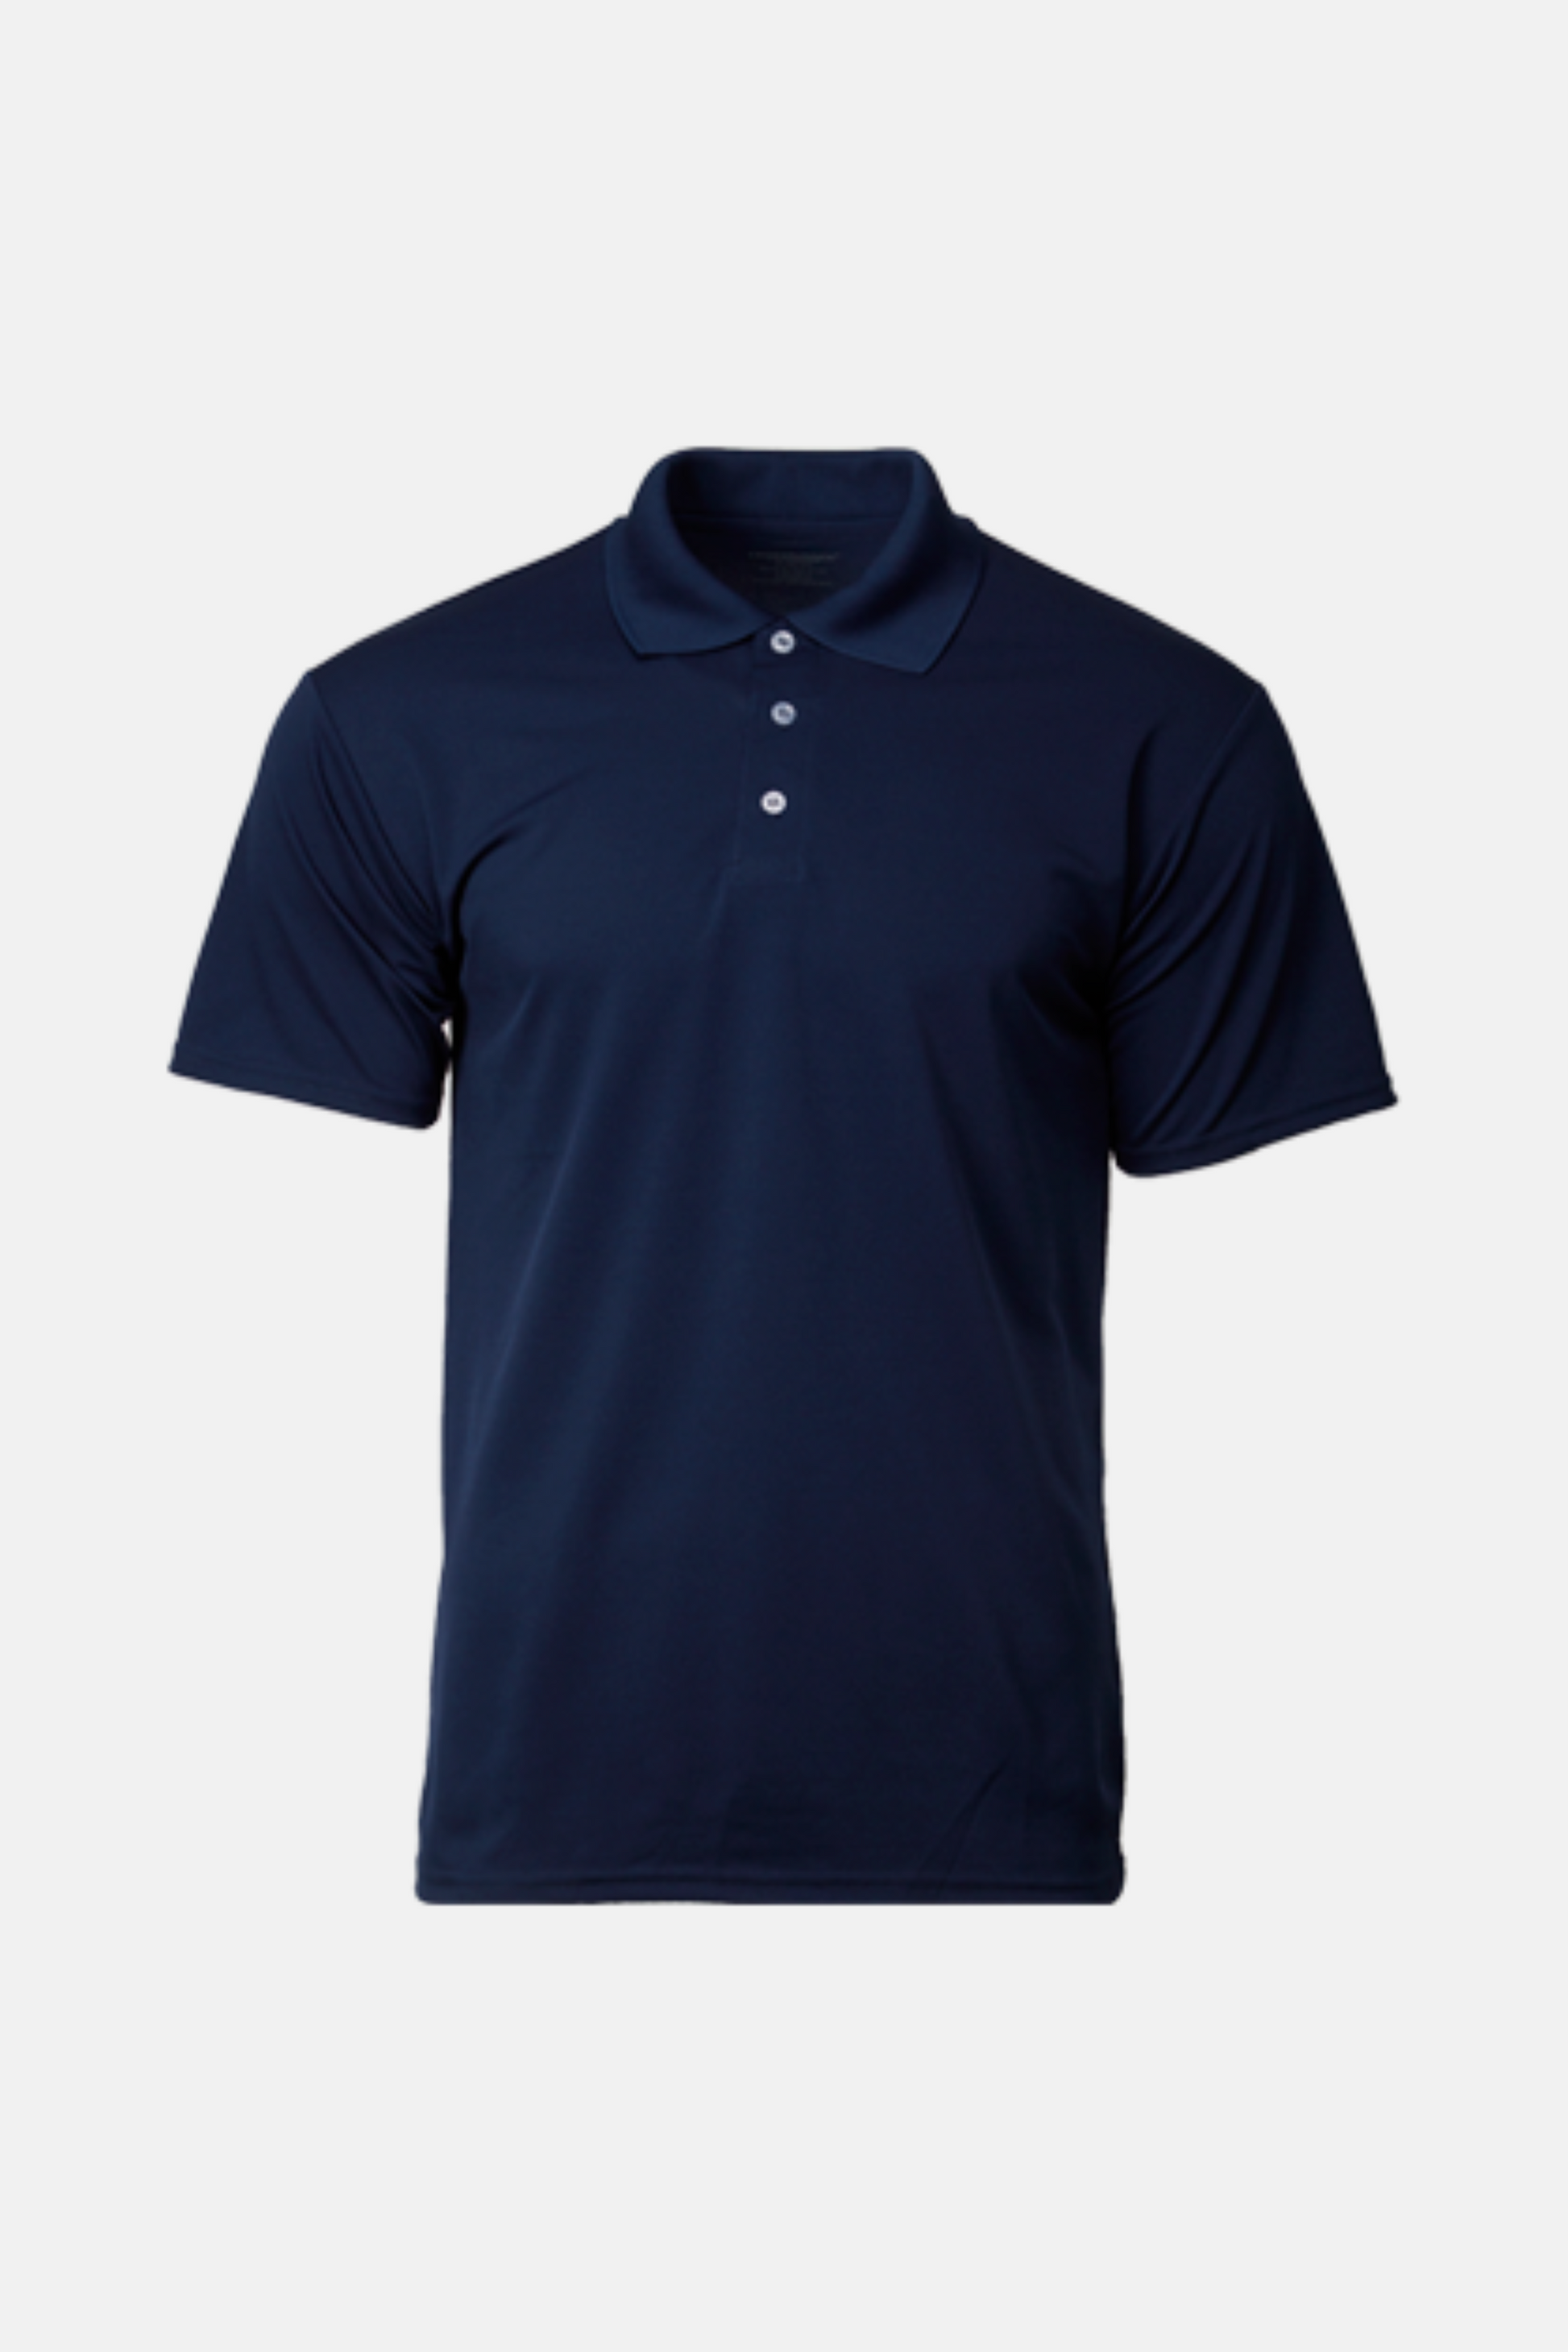 Navy Blue Dri-fit Polo T-Shirt